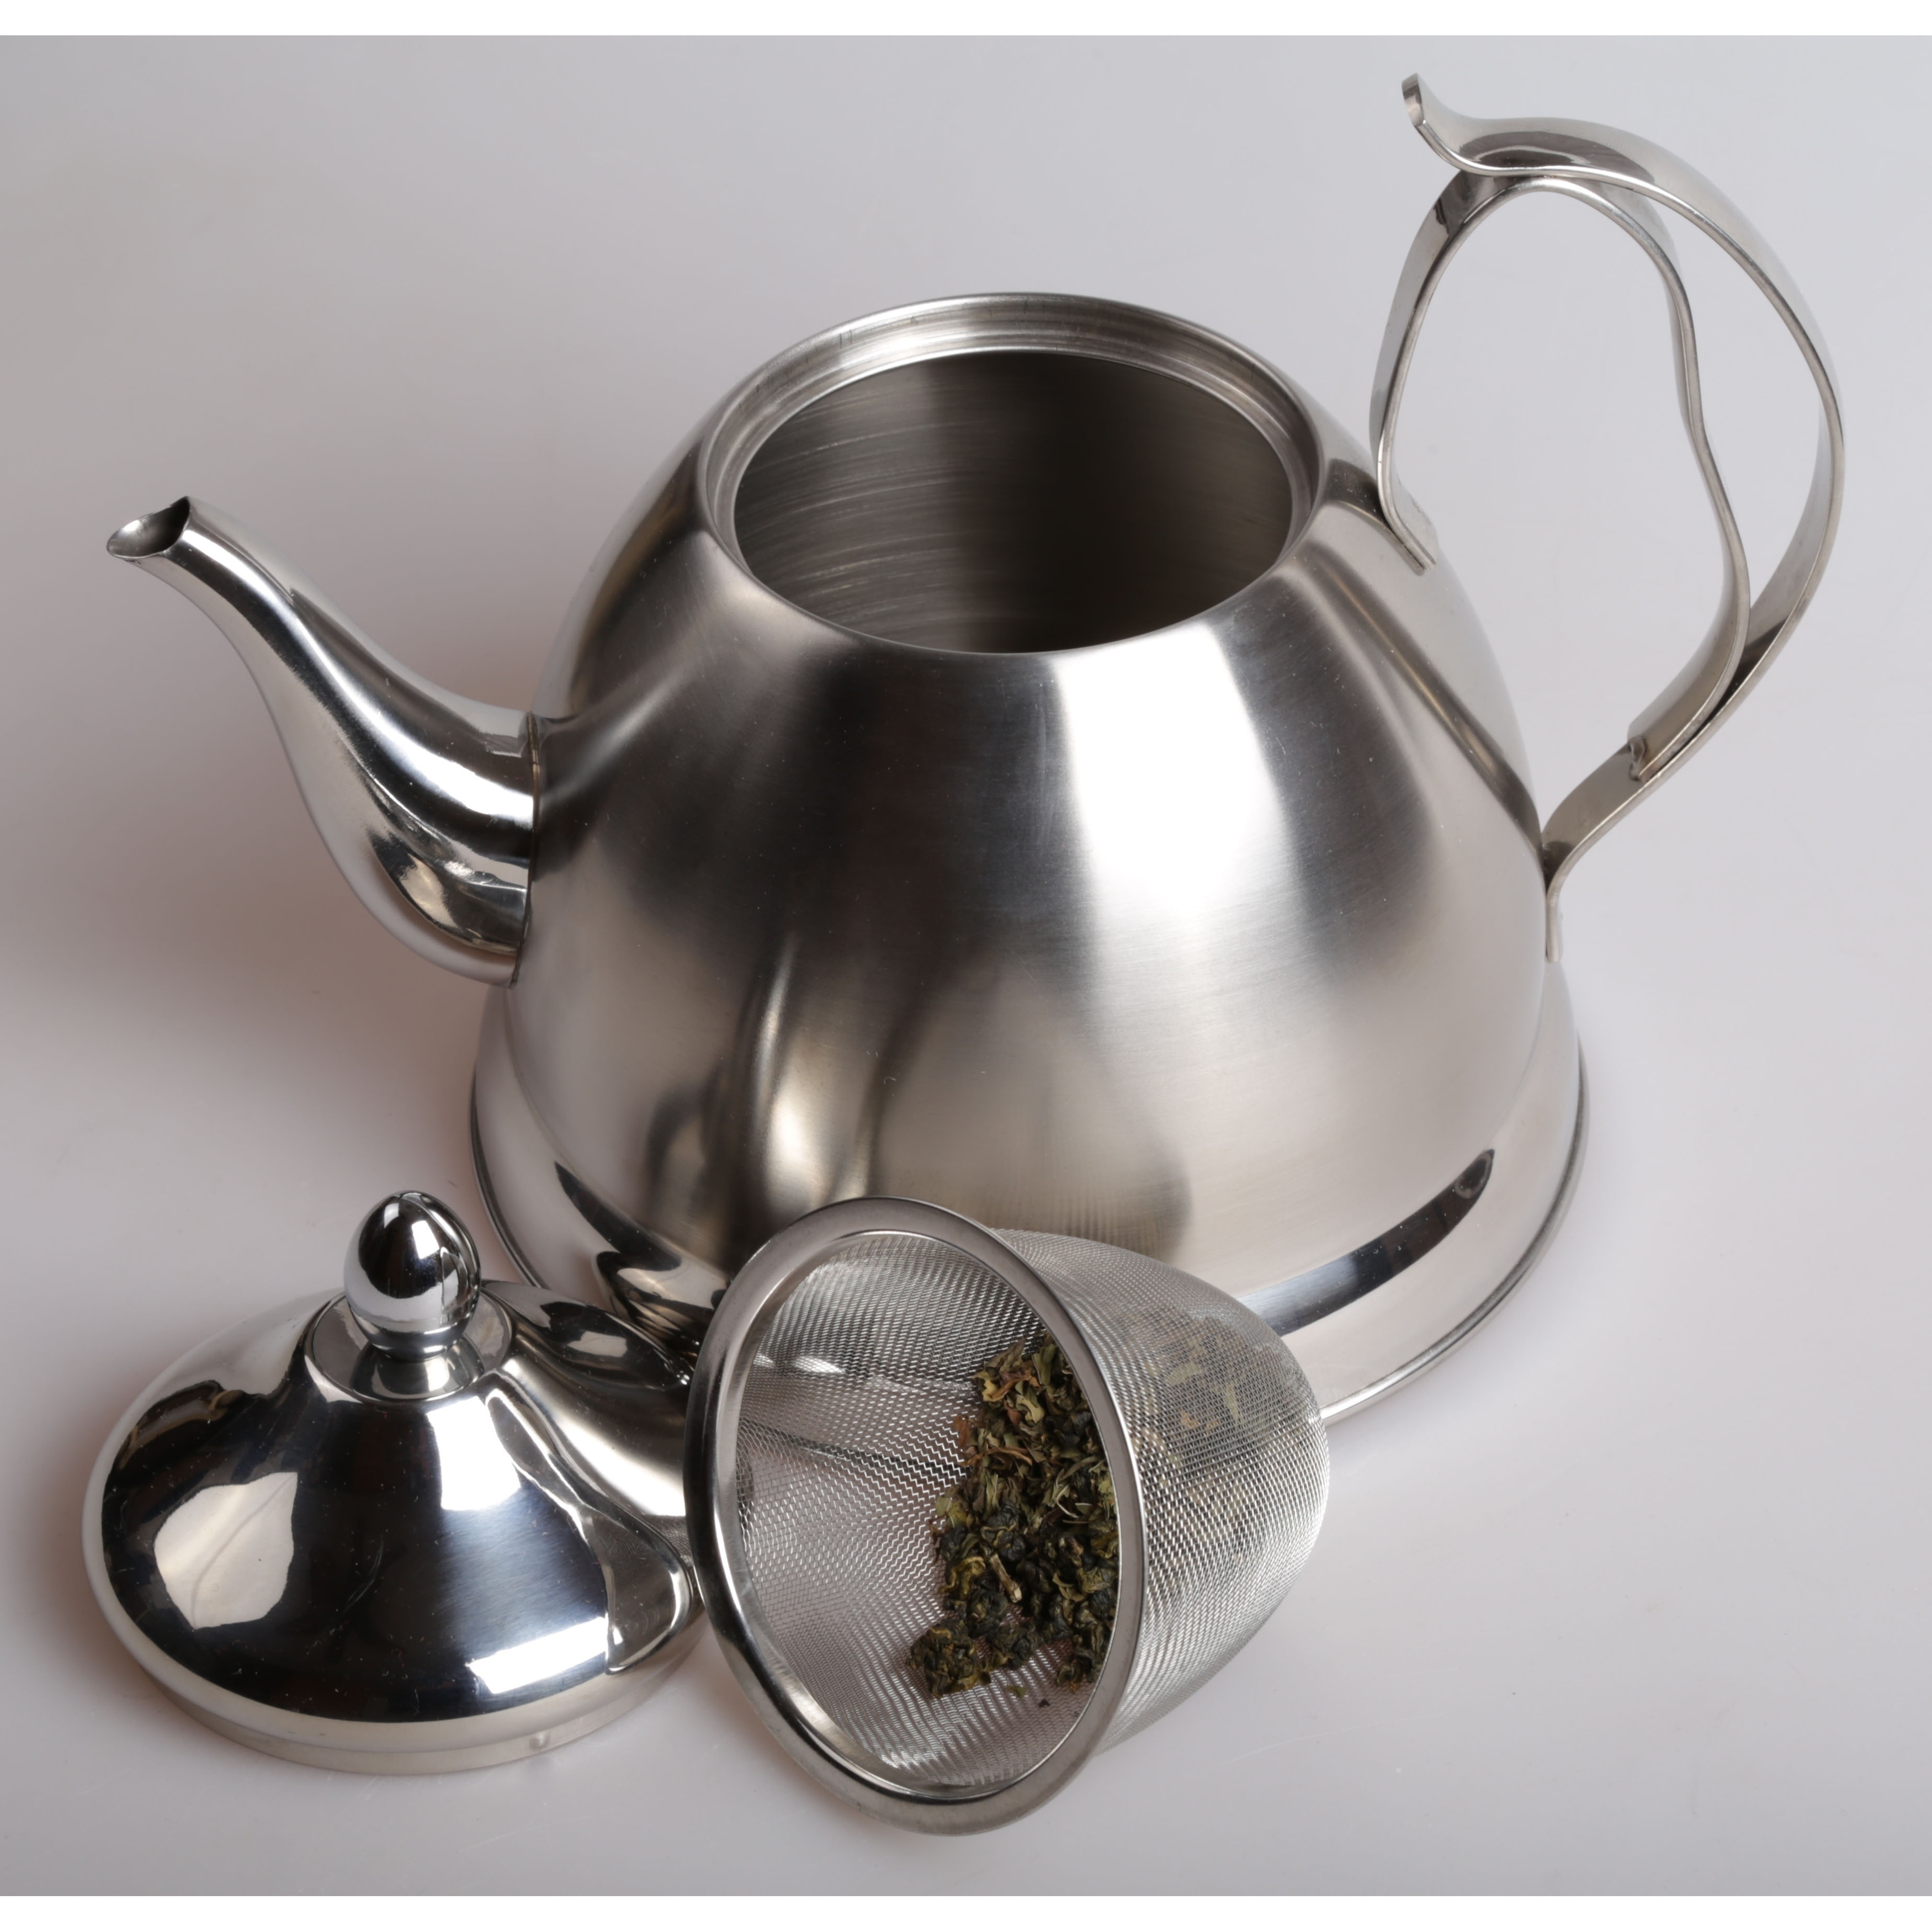 https://ak1.ostkcdn.com/images/products/10669204/Creative-Home-Nobili-Tea-2.0-Qt.-Stainless-Steel-Tea-Kettle-Tea-Pot-with-Infuser-Basket-c51fe5c9-c816-4722-8bf7-c1d2b8fb9fa2.jpg